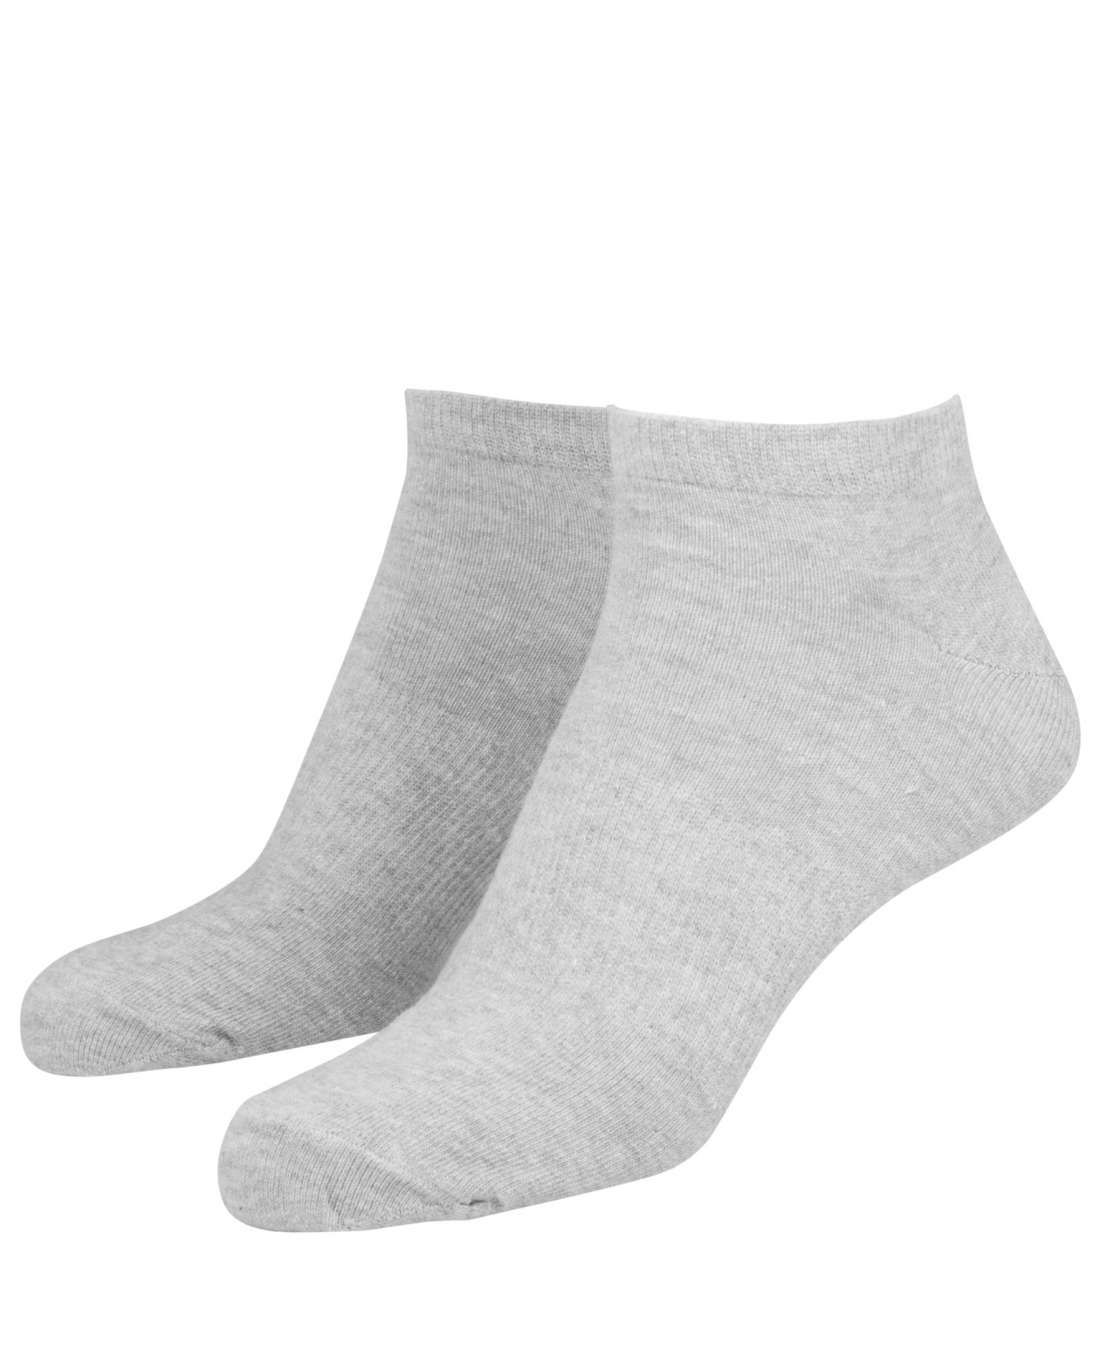 5Pack Gray Socks Urban Classic